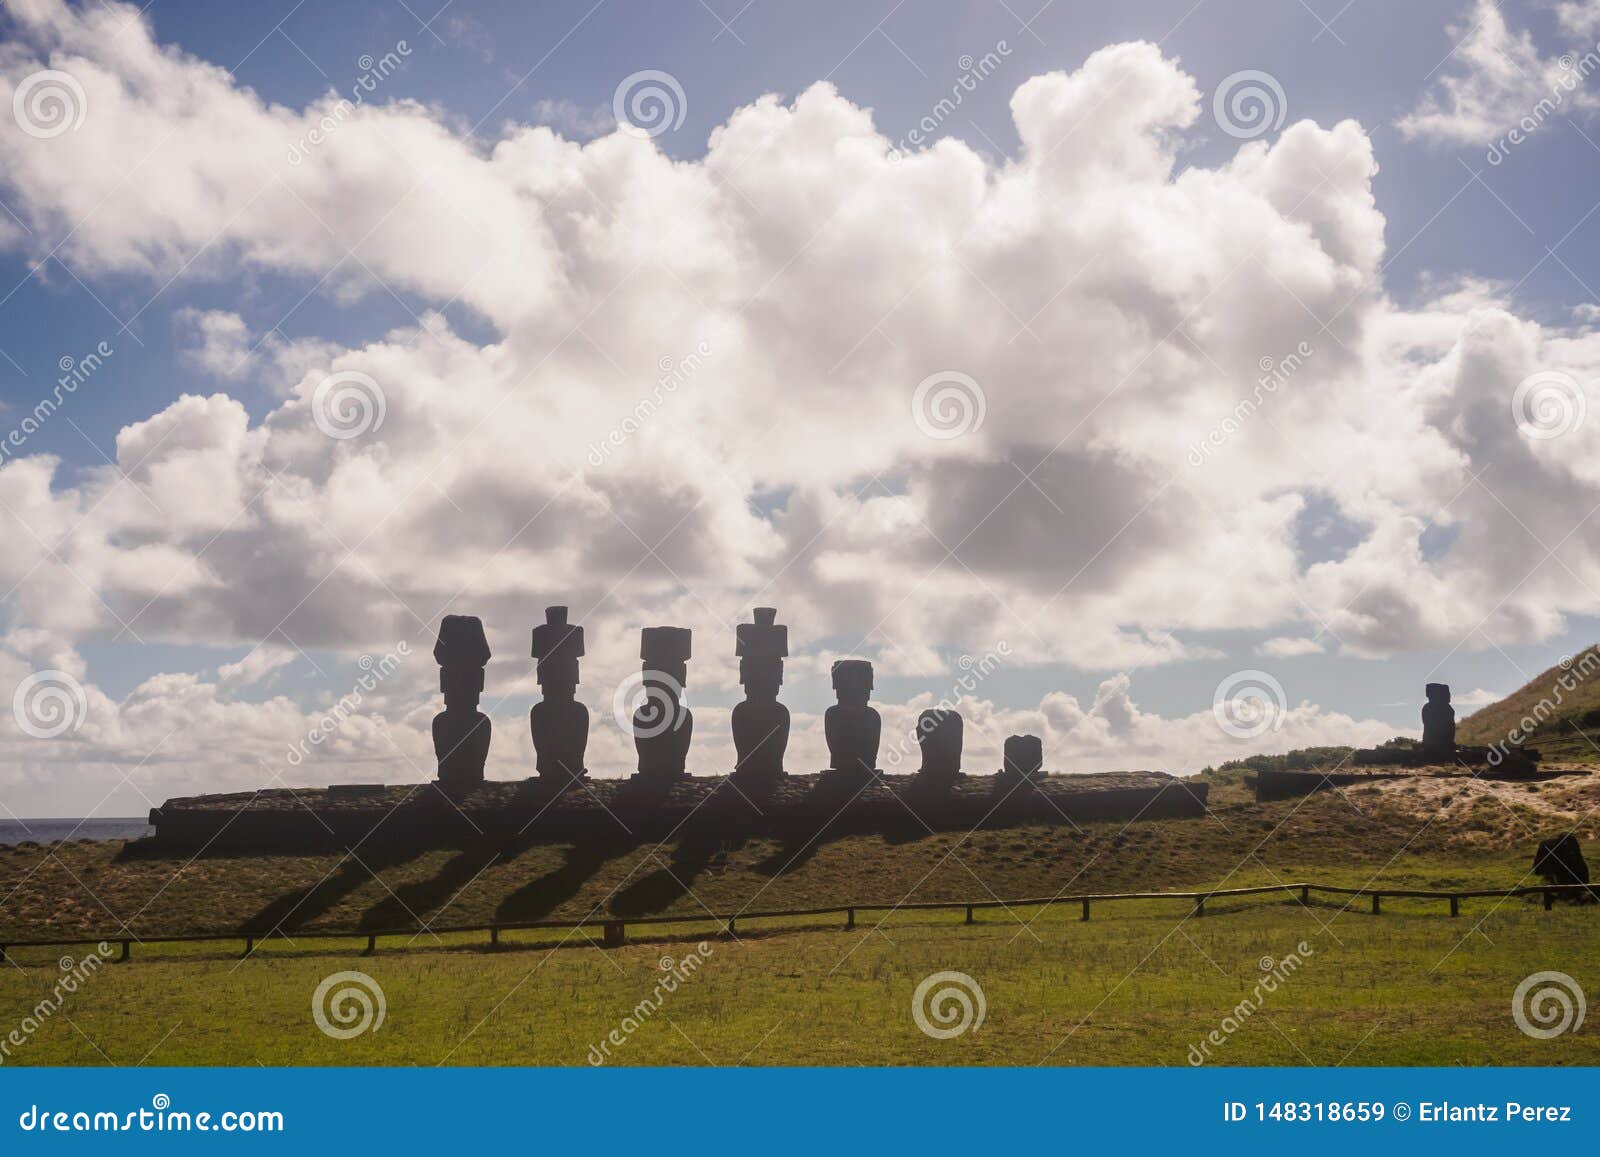 Ahu, the ceremonial center of Easter Island | Imagina Rapa Nui